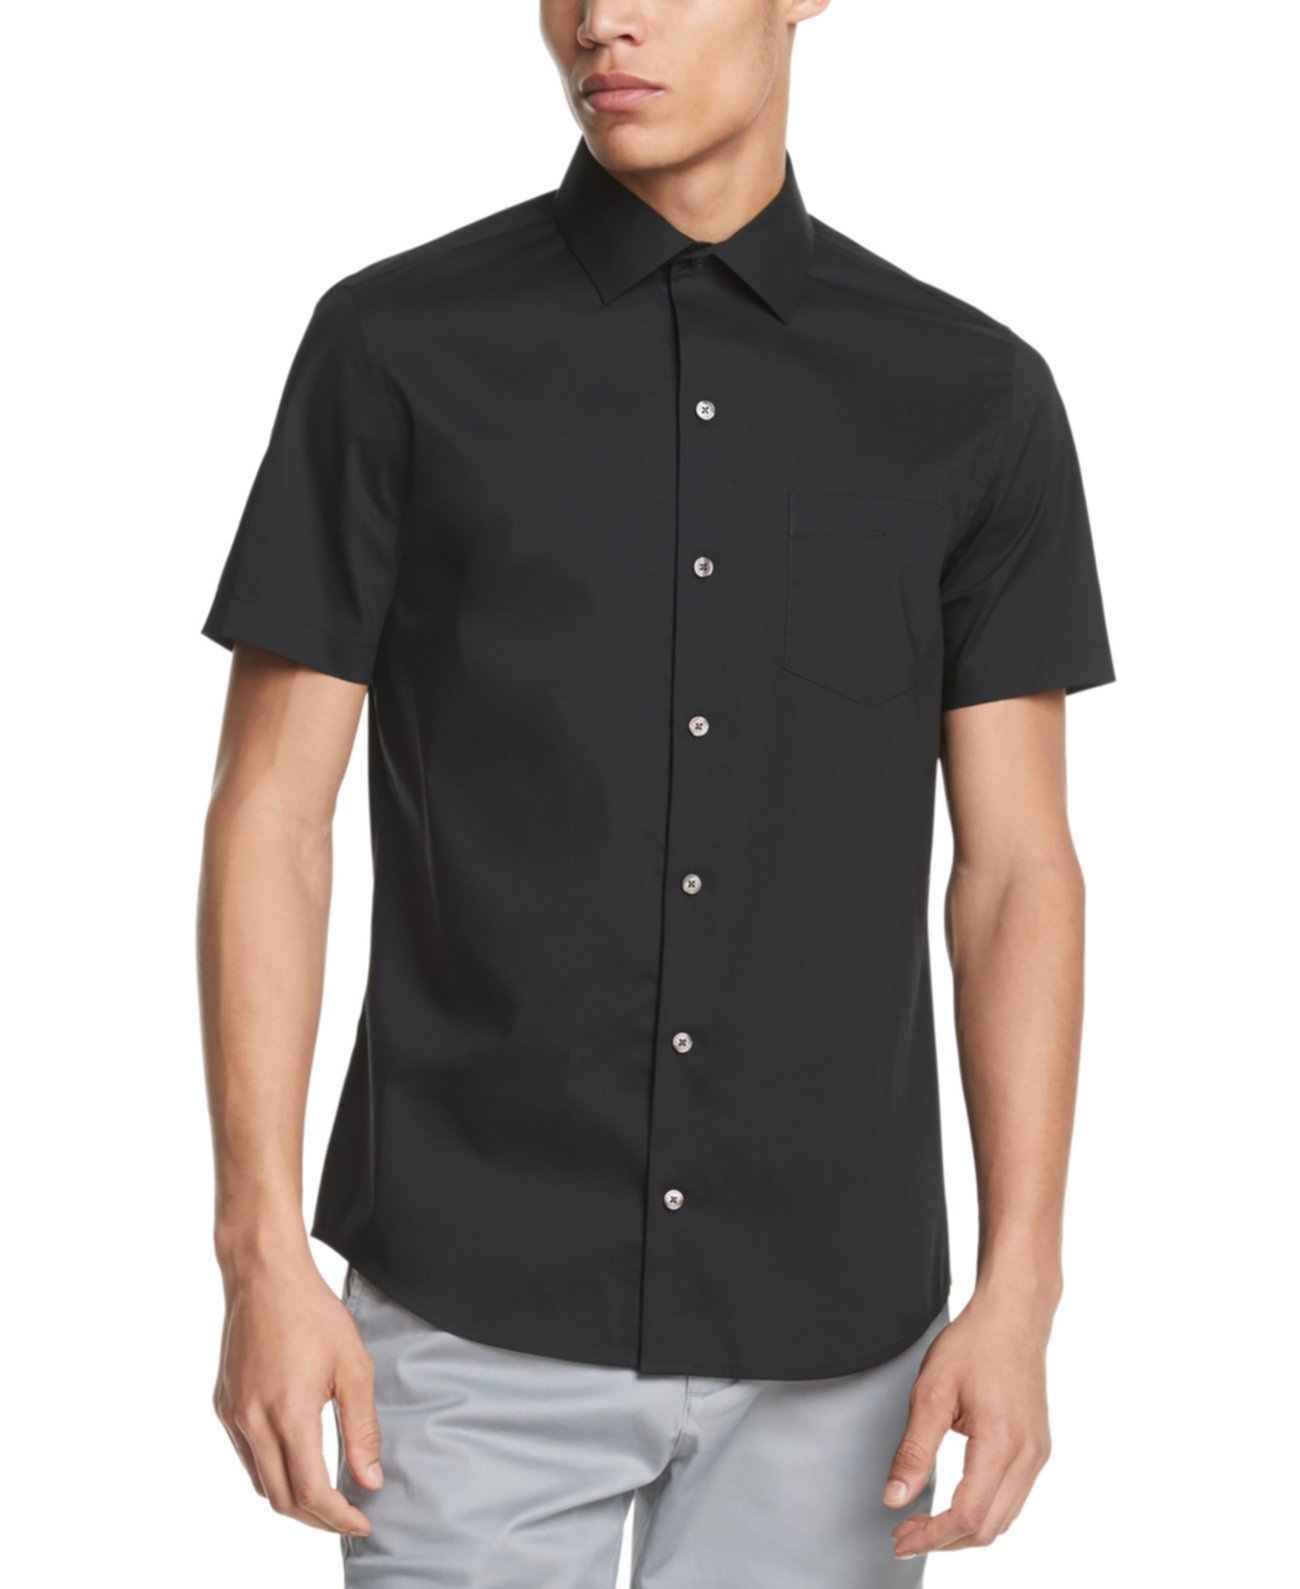 Мужская эластичная рубашка с короткими рукавами и эластичным французским карманом DKNY